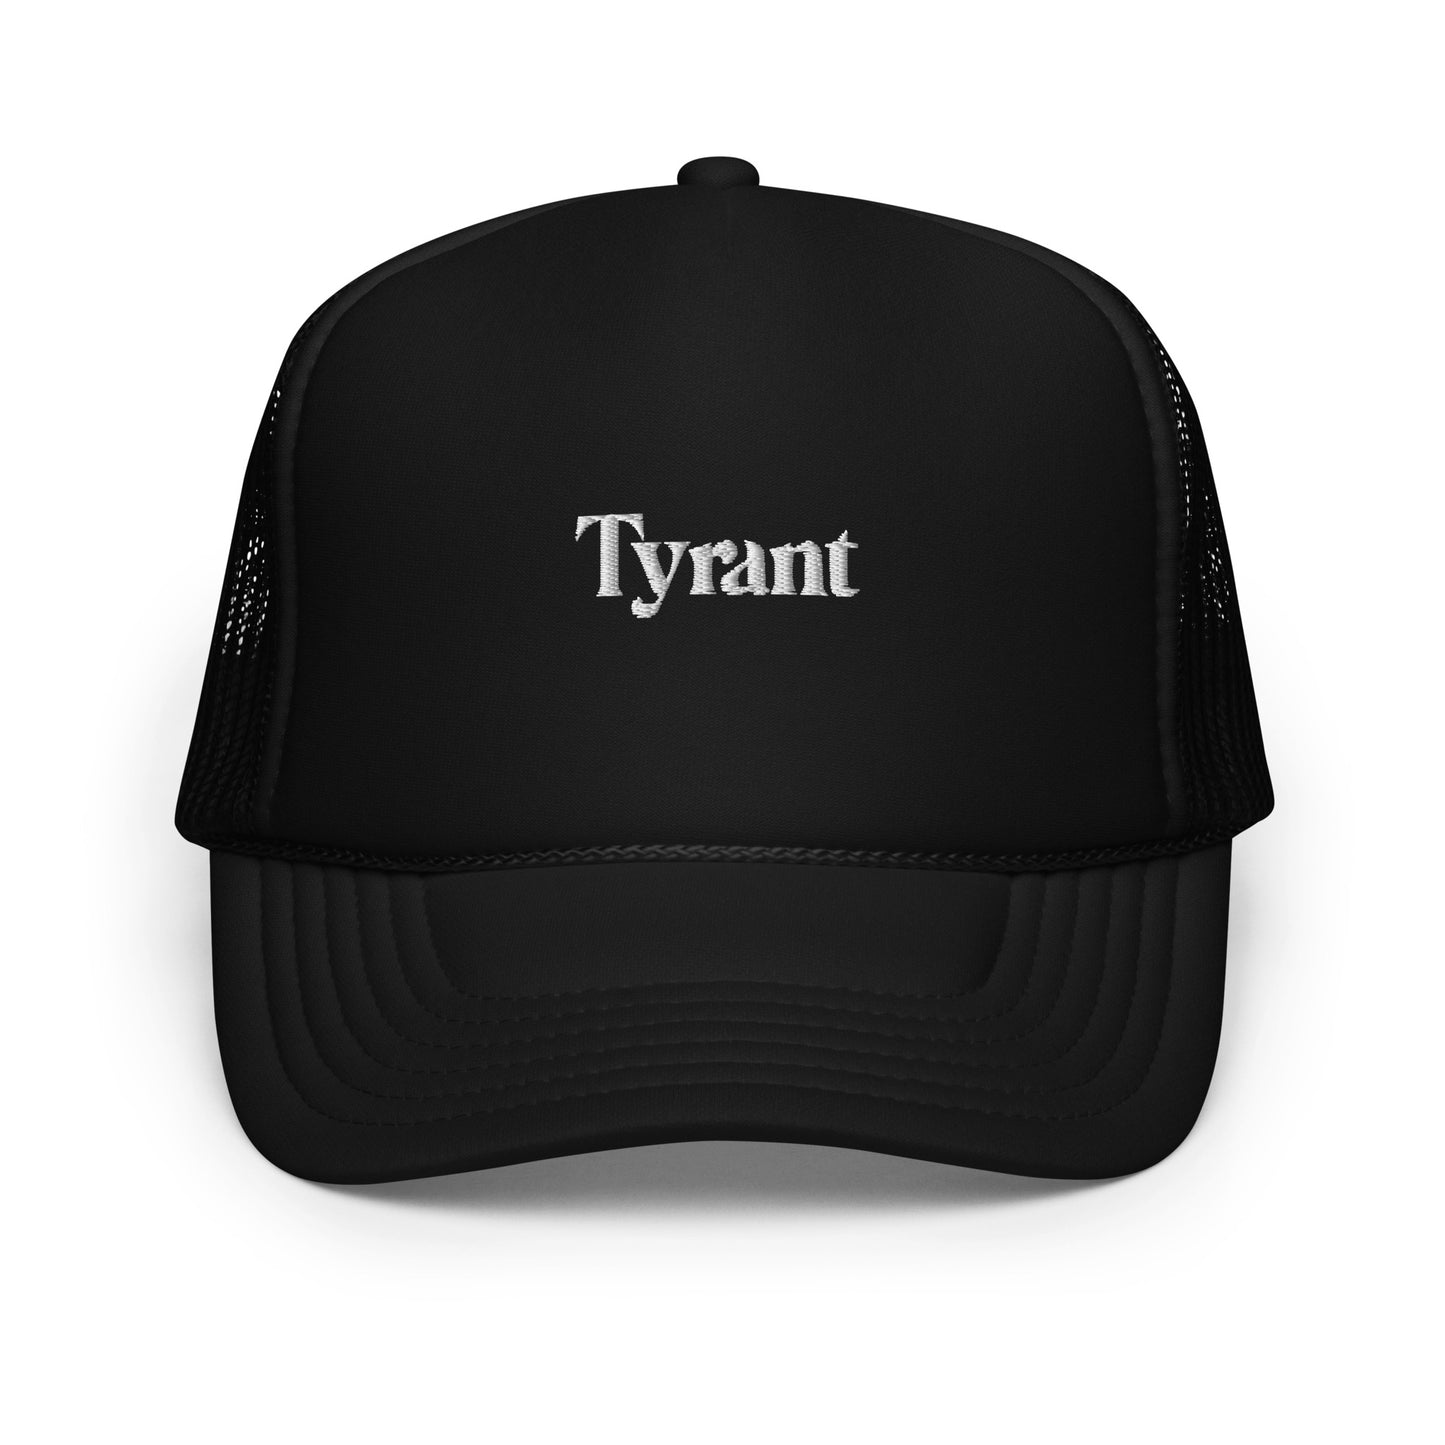 Tyrant trucker hat